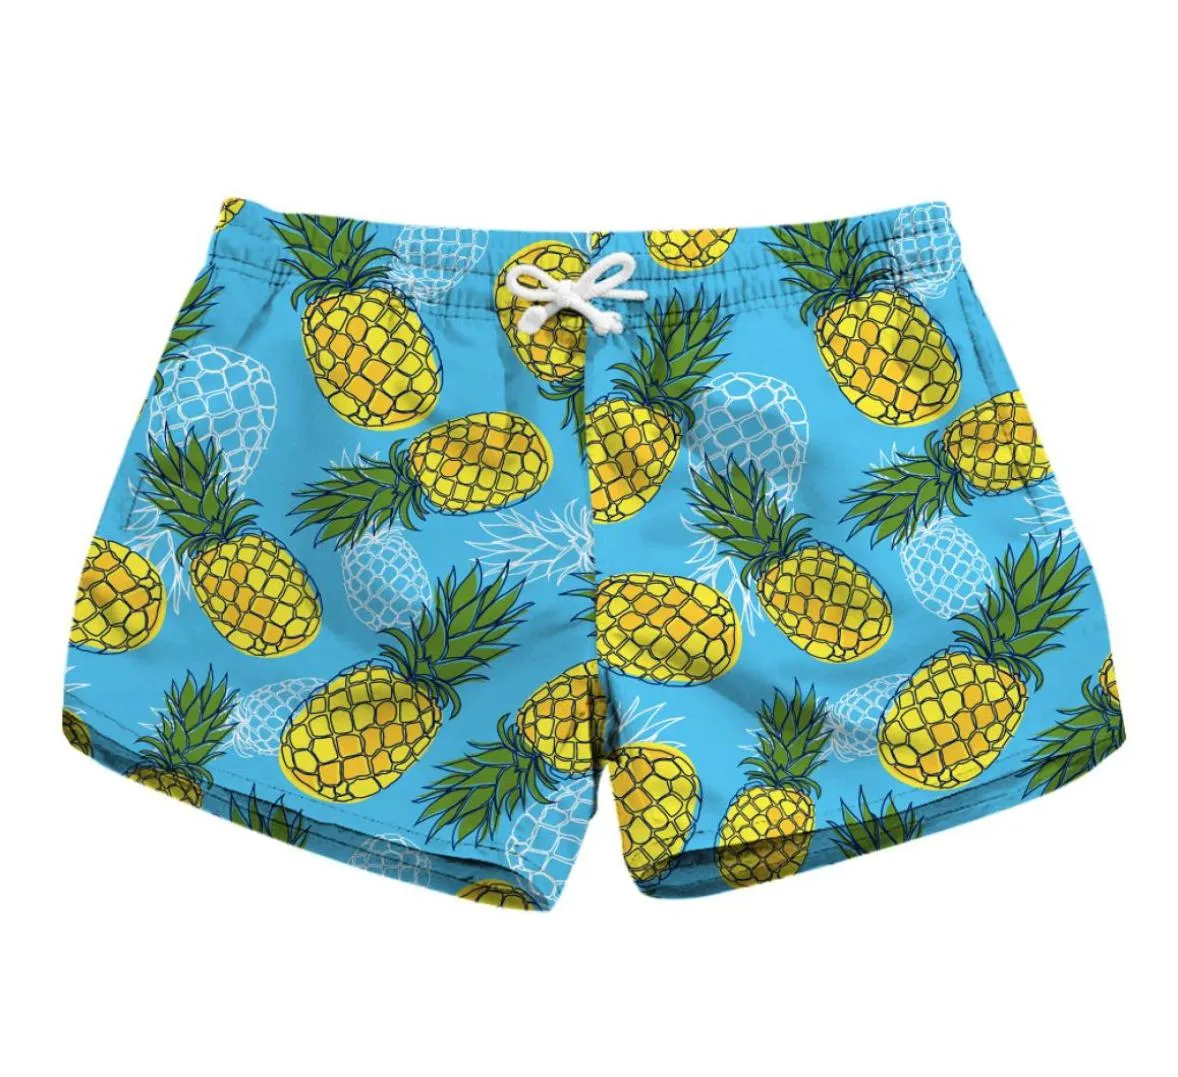 S To XL Elastic Women Summer Sports Shorts 5 Paerns Pineapple Print Workout Girls Beach Shorts Blue White Black Colors2460200